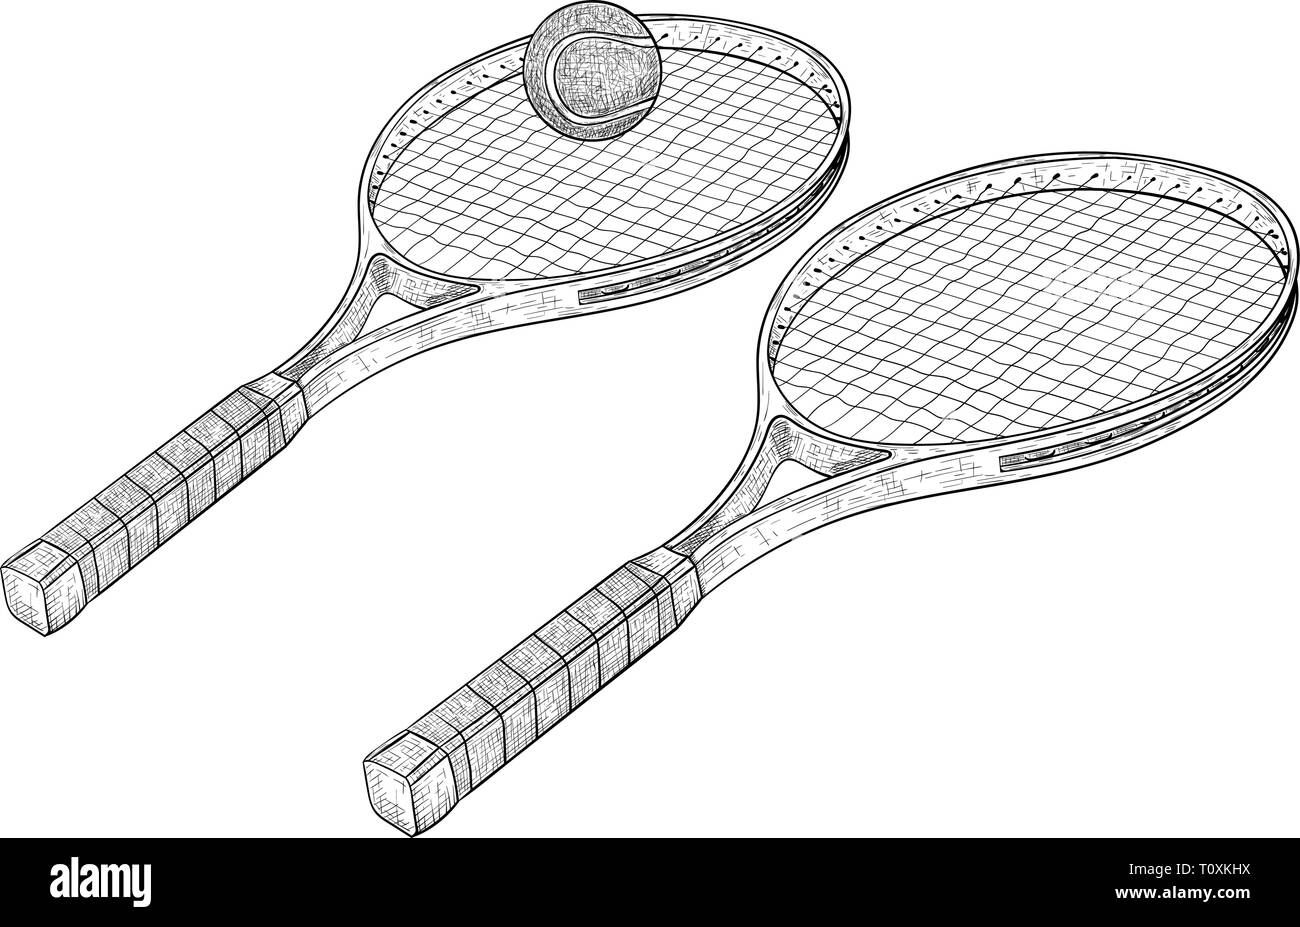 Les raquettes de tennis. Croquis dessinés à la main, Illustration de Vecteur